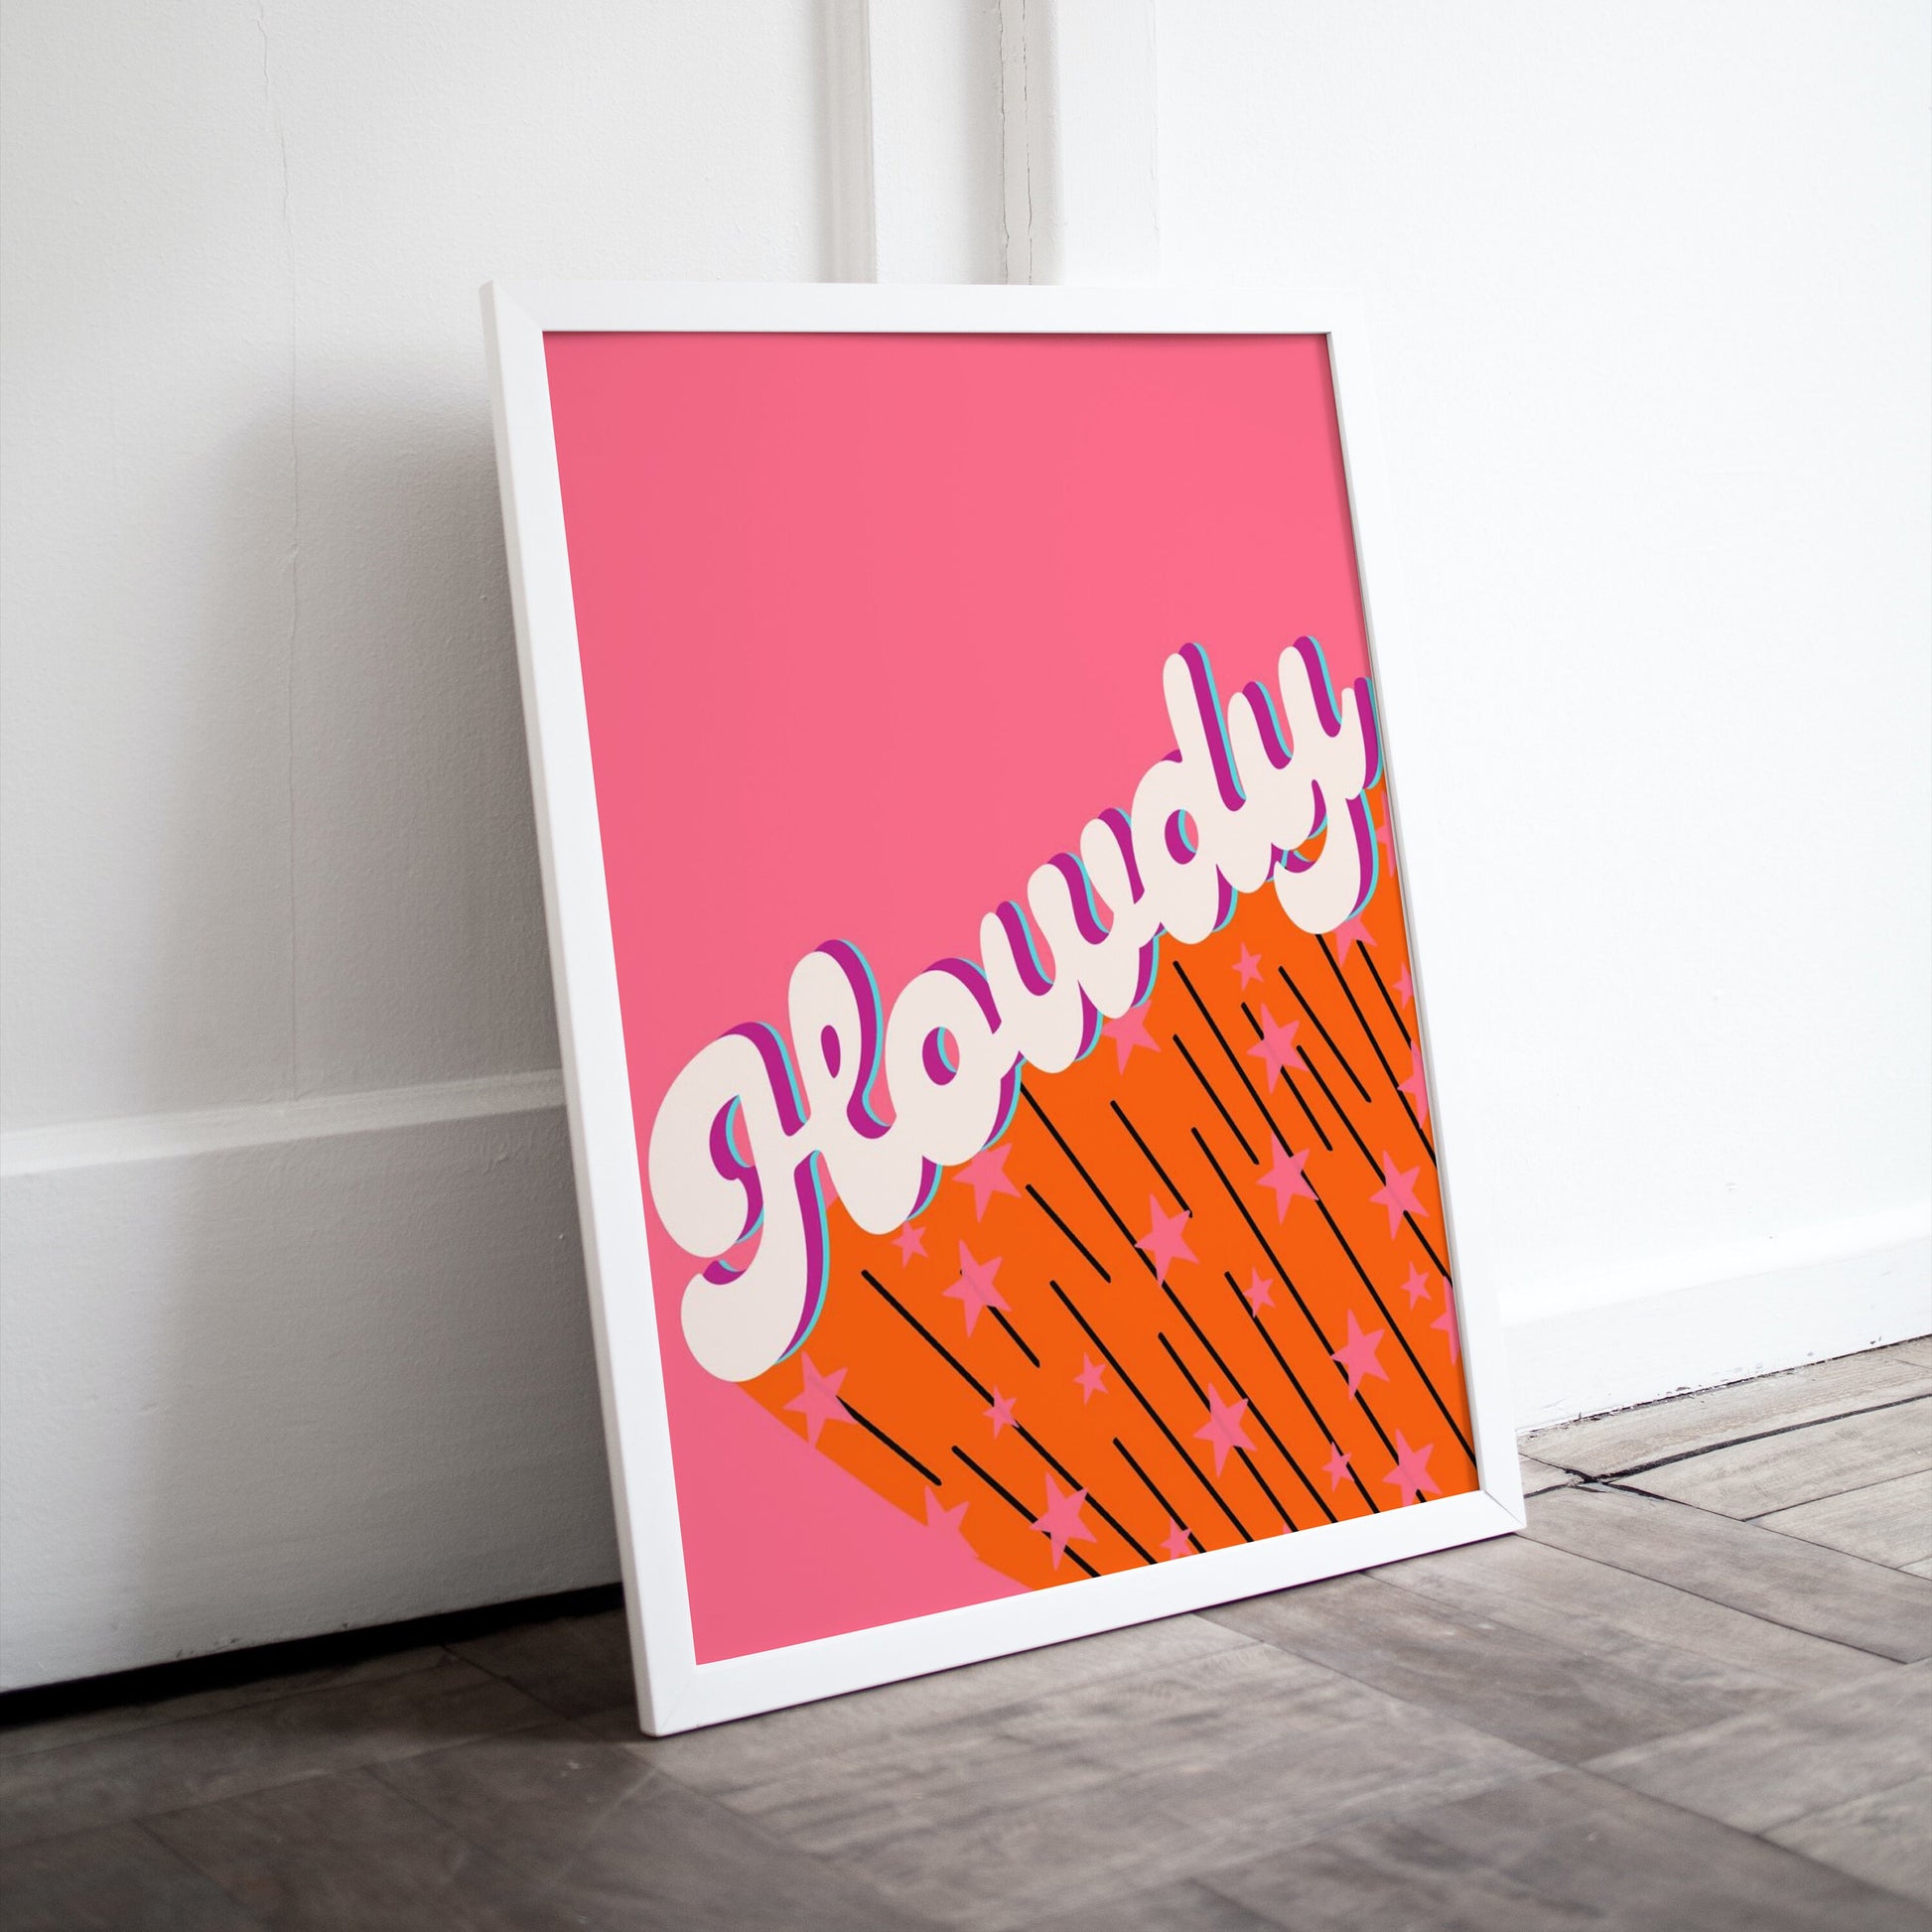 Pink Howdy Poster INSTANT DOWNLOAD, Preppy Wall Art, Preppy decor, Trendy Digital Prints, Academia aesthetic, Preppy Room, Room decor